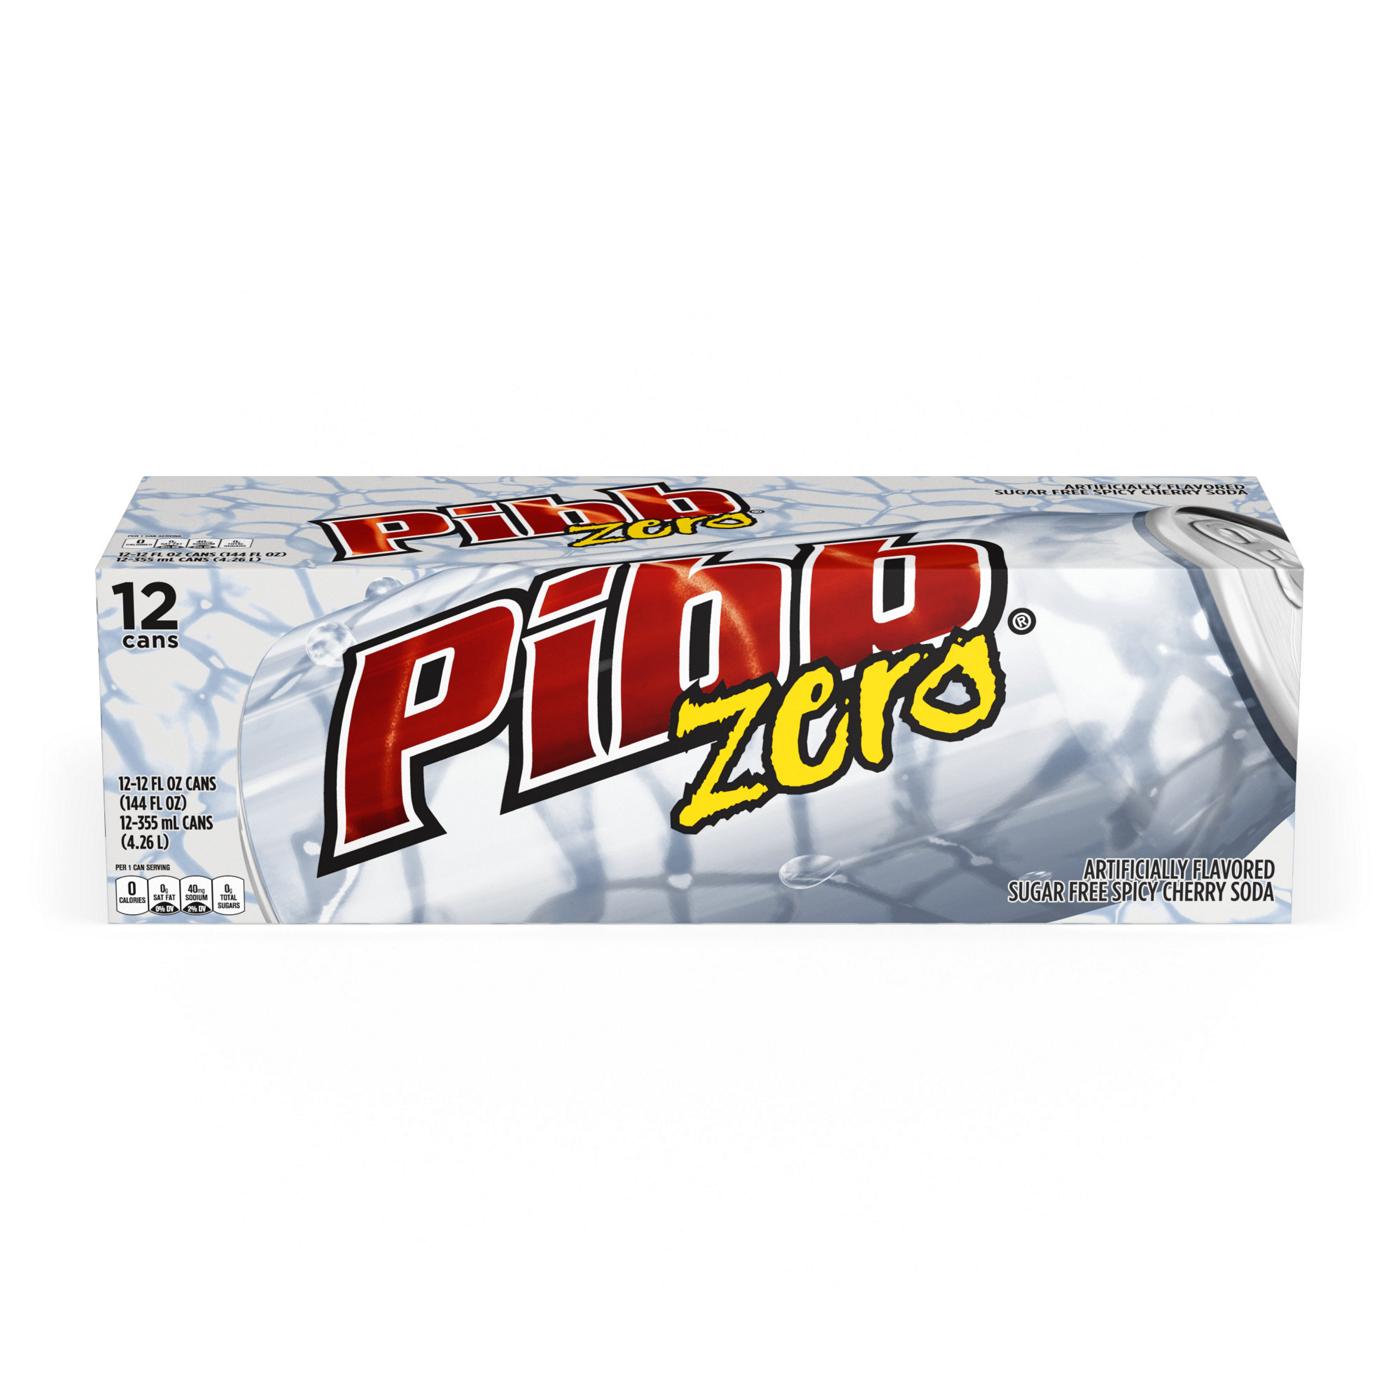 Pibb Zero Sugar Free Soda 12 oz Cans; image 1 of 3